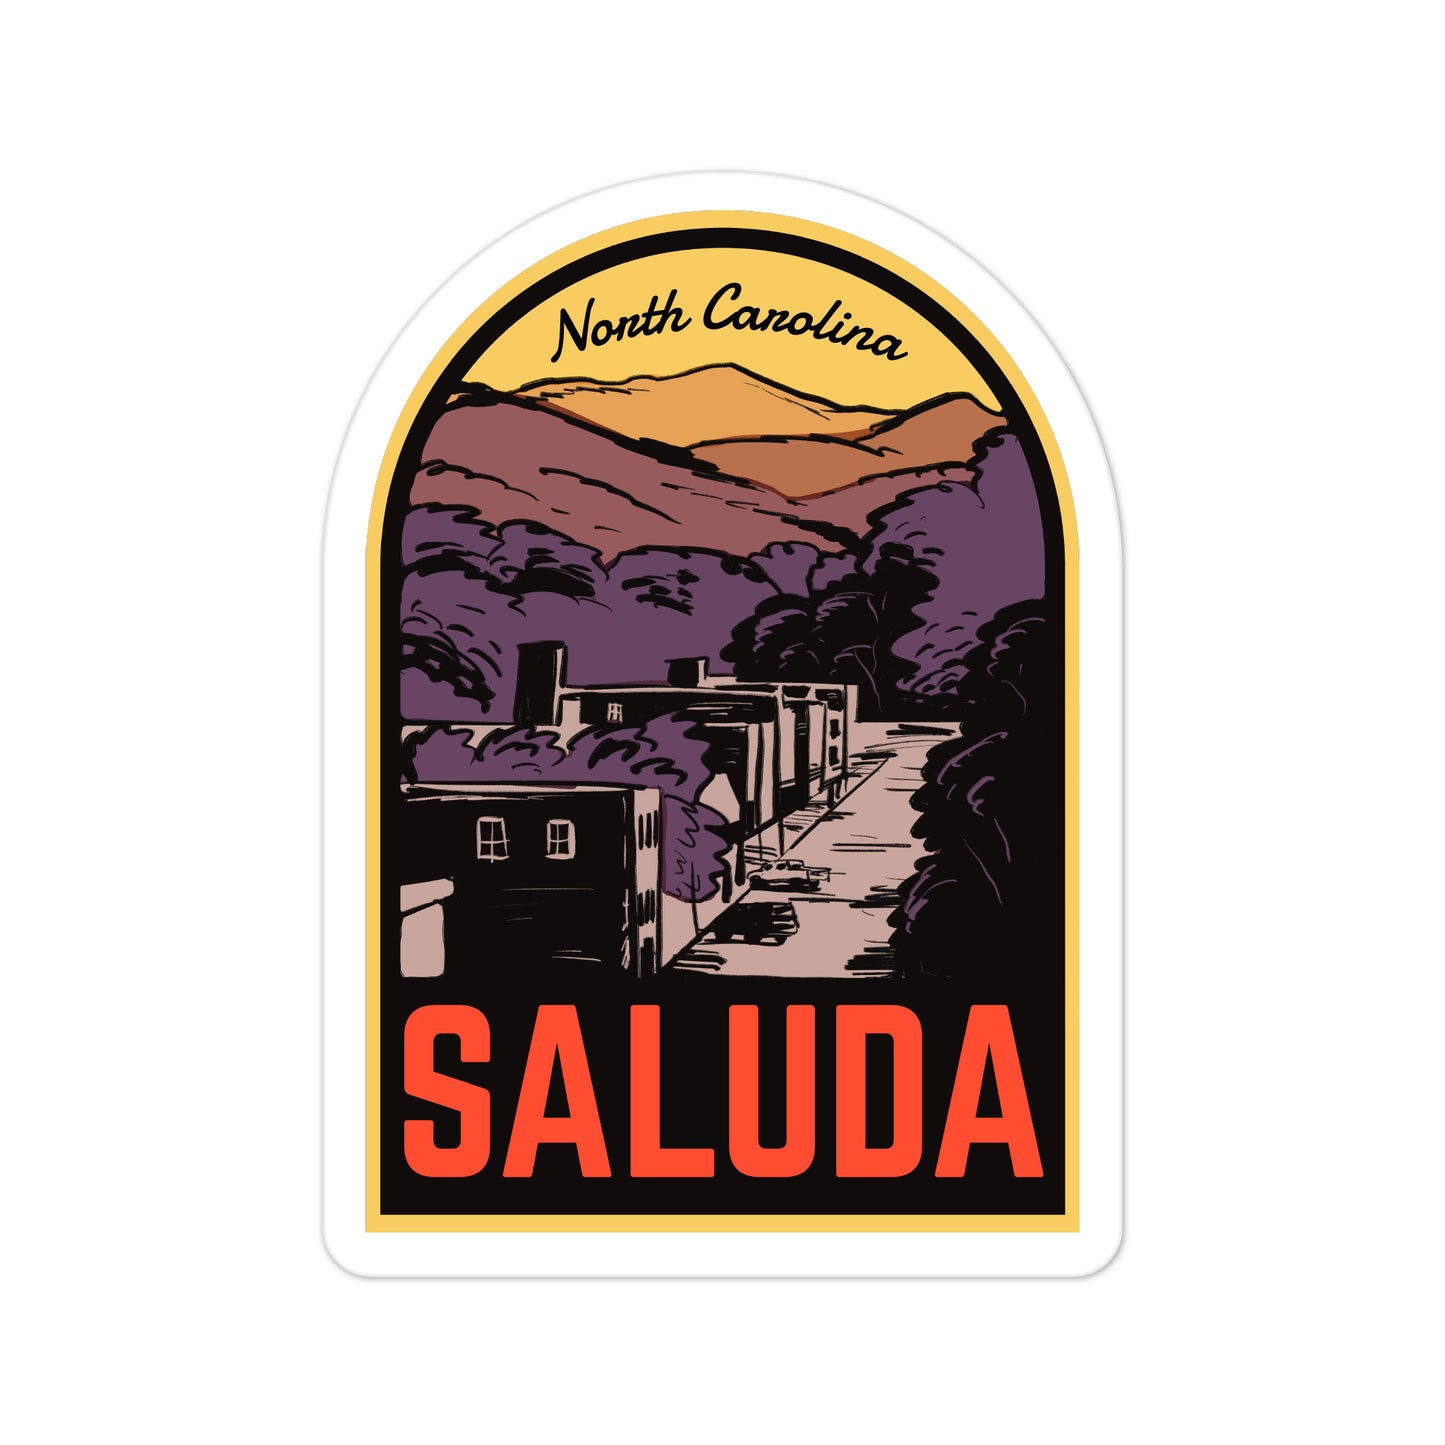 A sticker of Saluda North Carolina